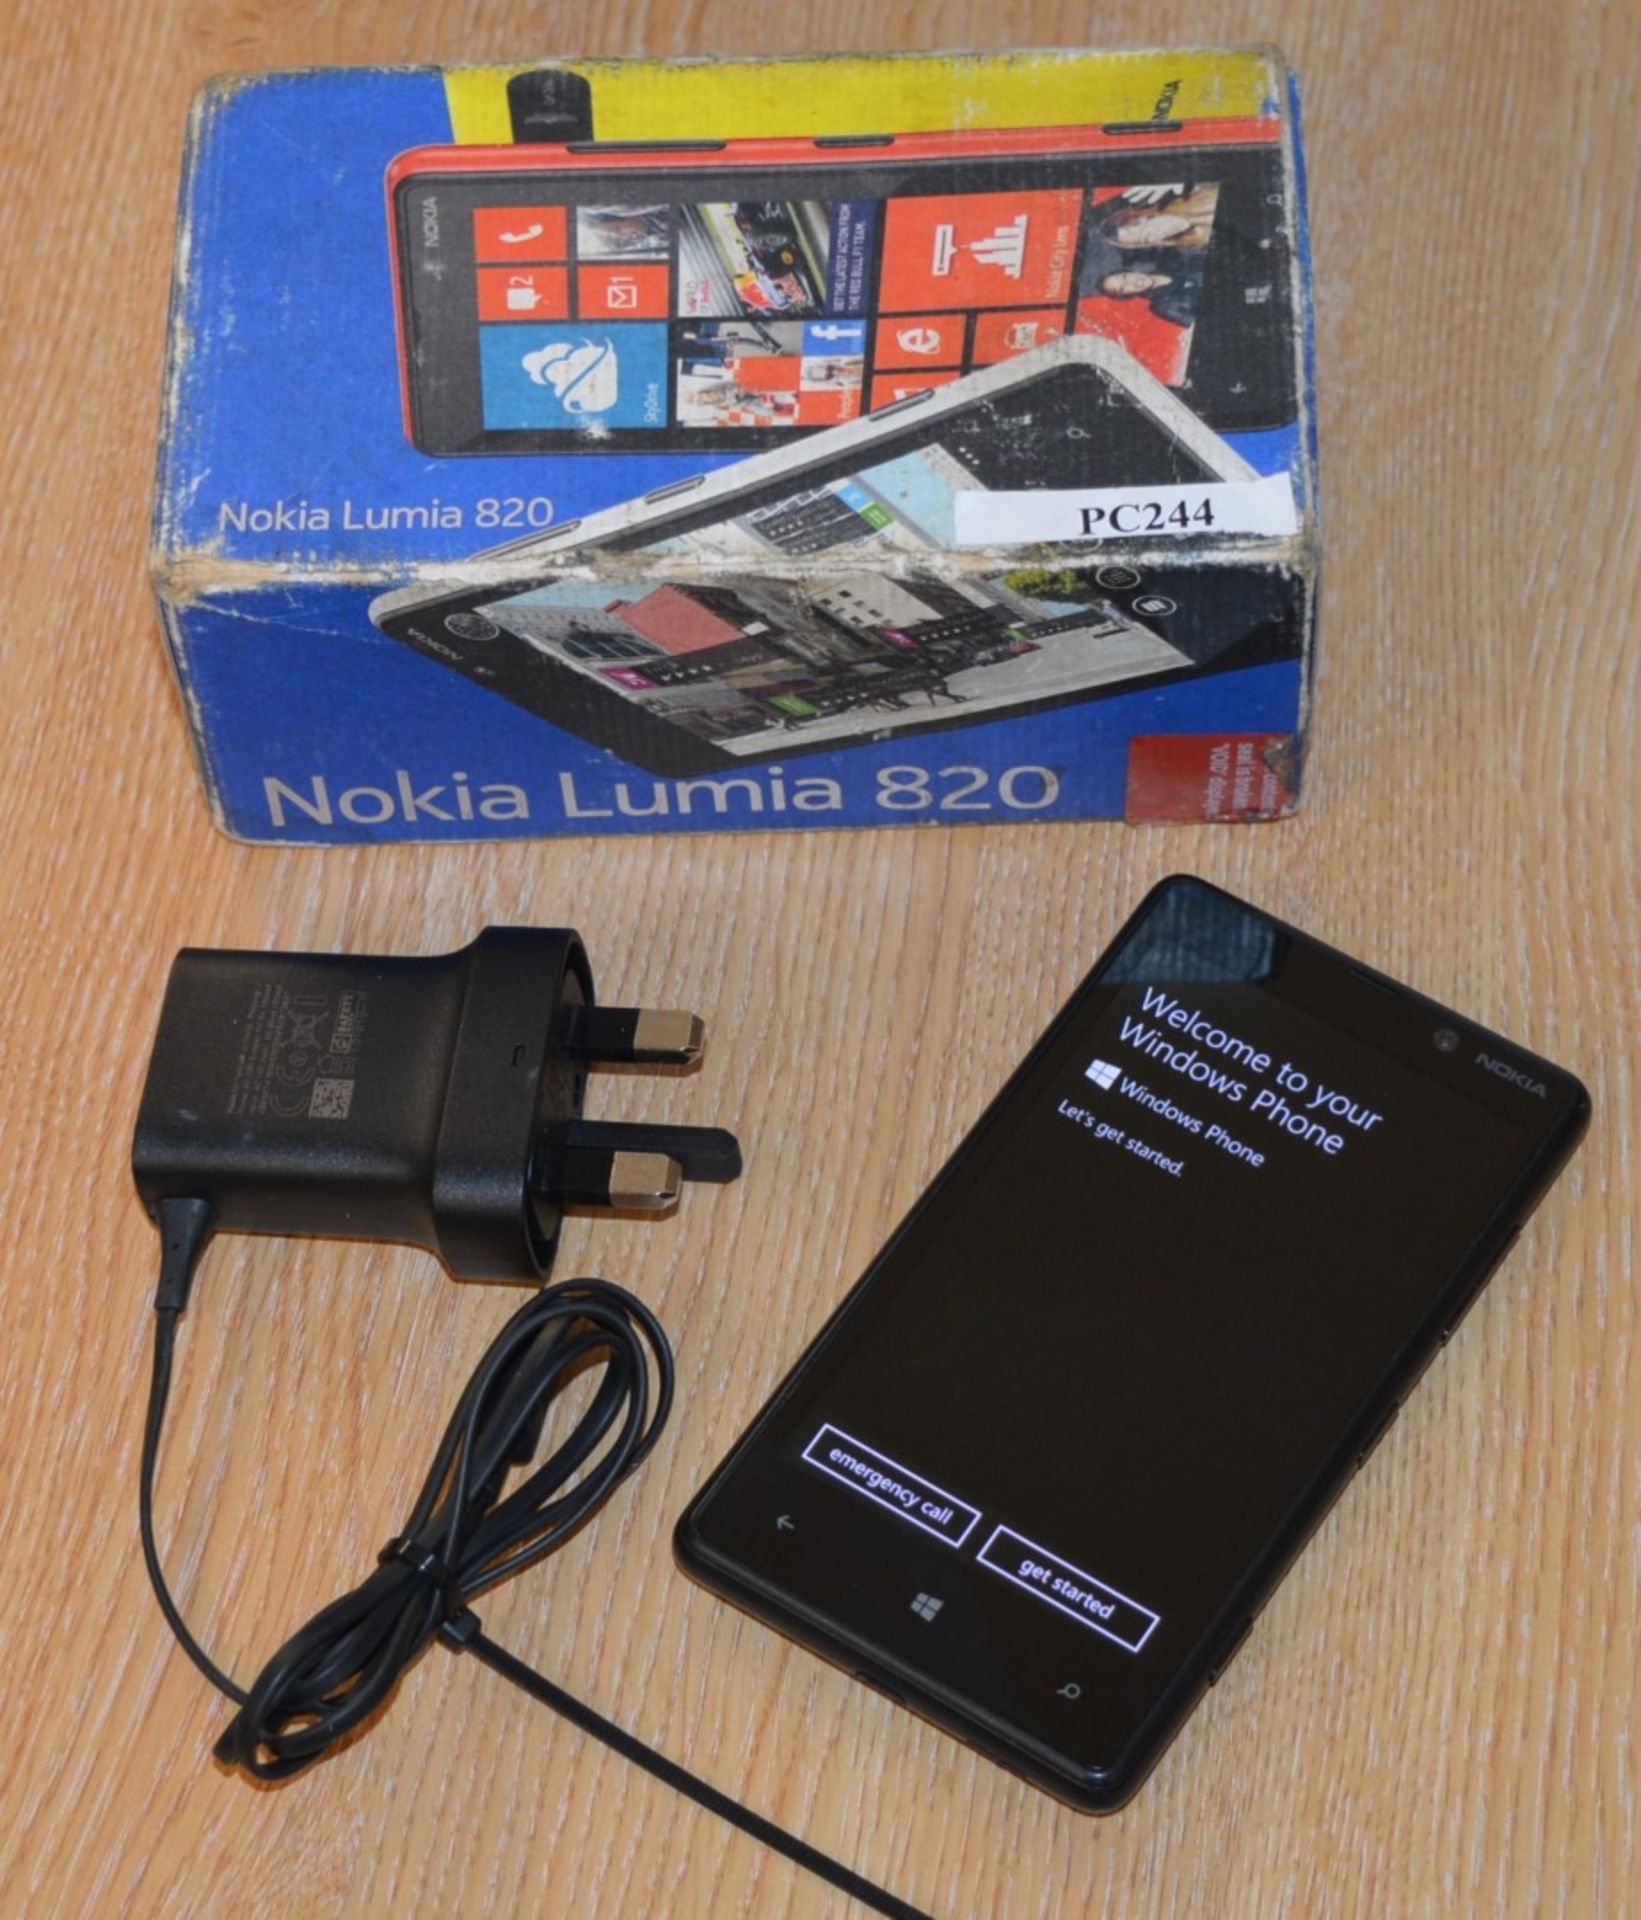 1 x Nokia 820 Mobile Phone - Black - Features Dual Core 1.5ghz Processor, 1gb System Ram, 8gb Intern